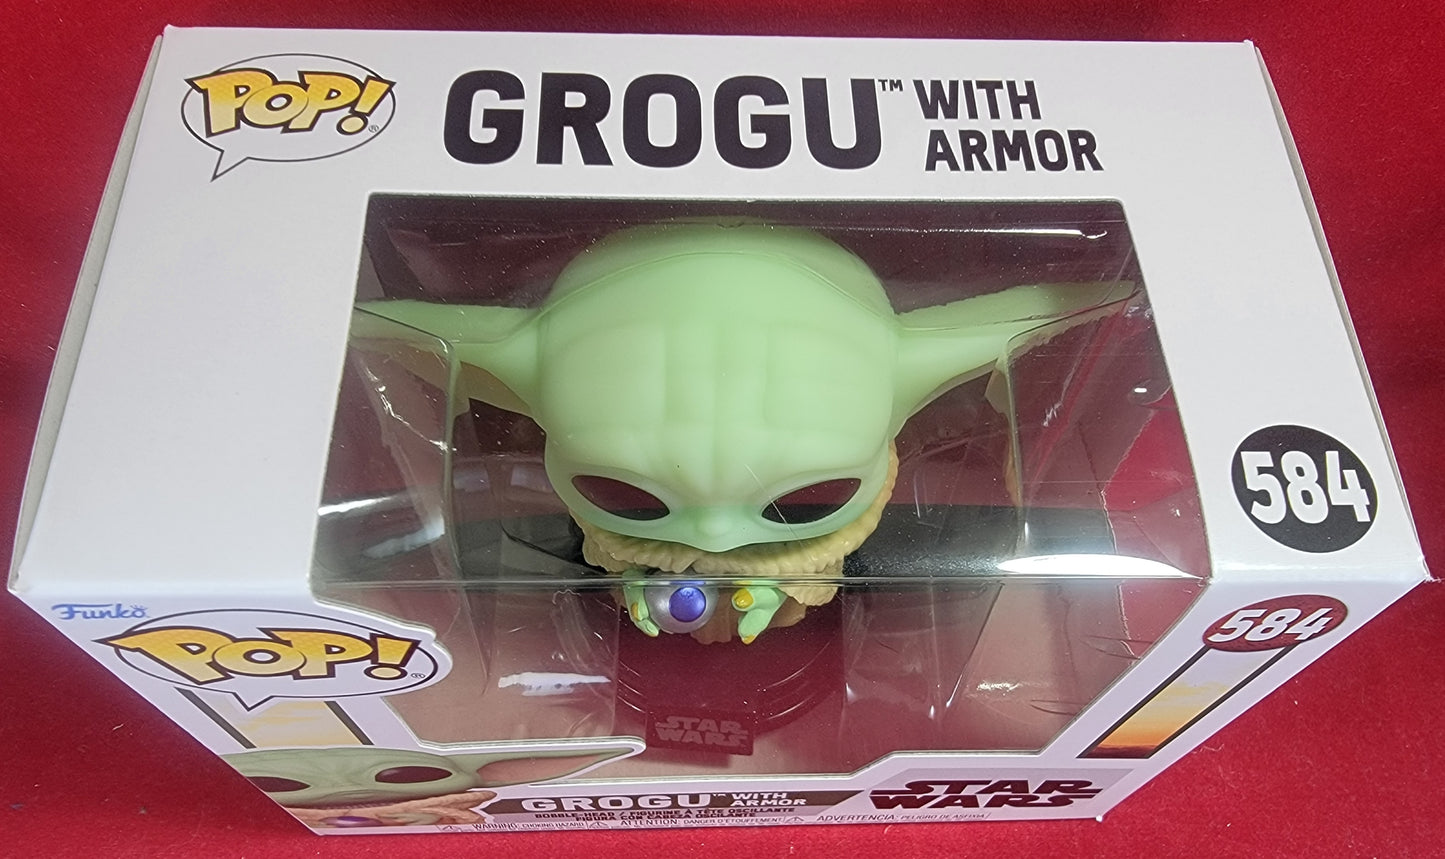 Grogu with Armor funko # 584 (nib)
With pop protector